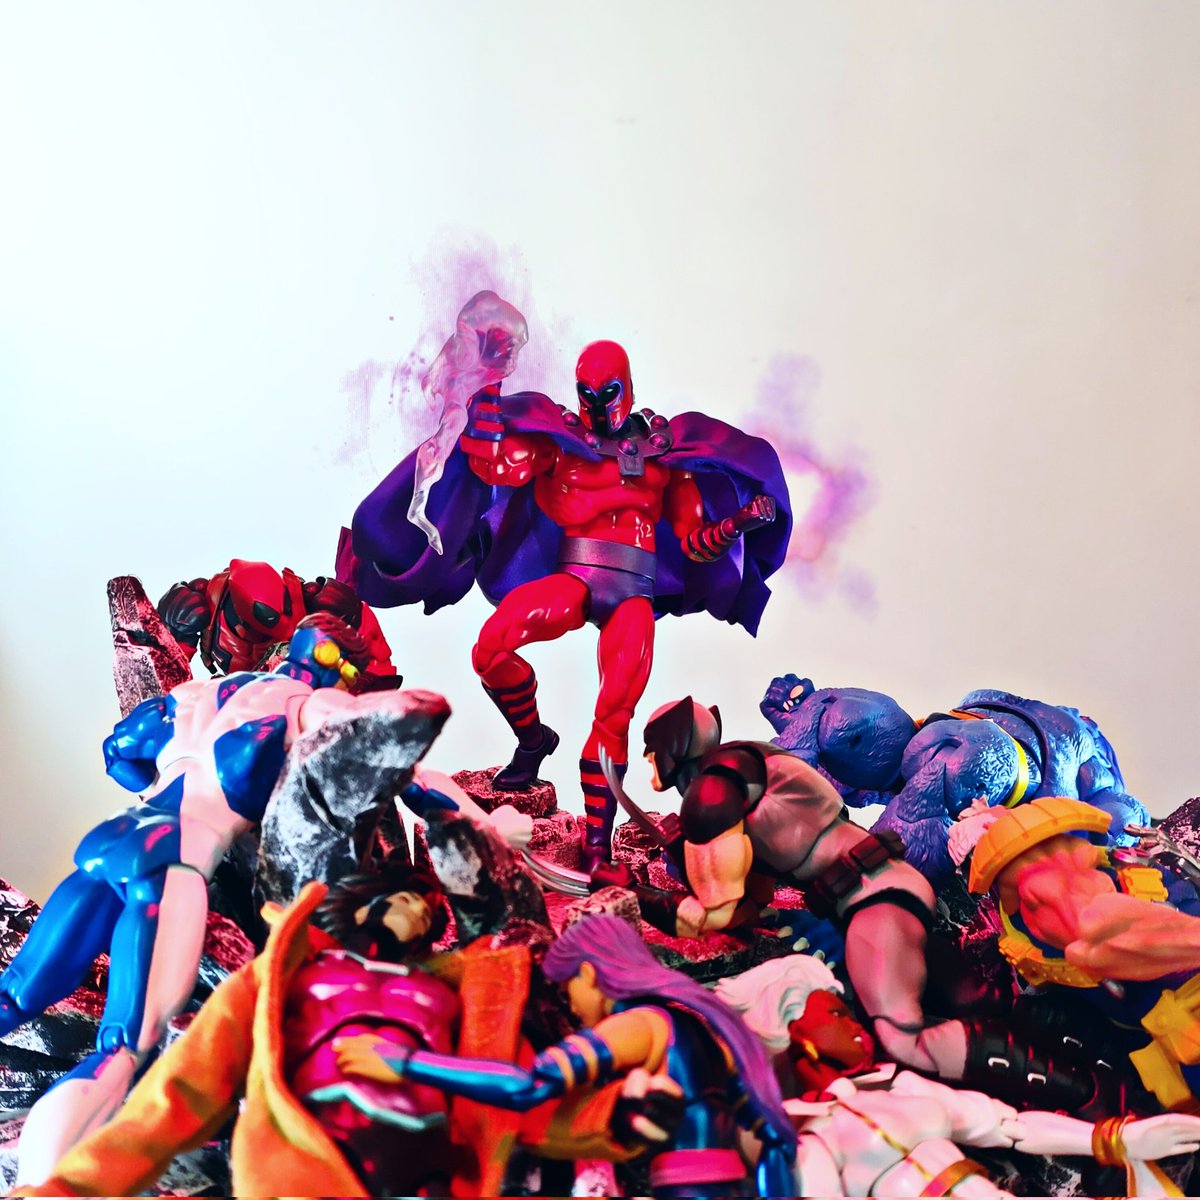 🧲
#Magneto
#Deadpool
#Deadpool3
#Wolverine
#cyclops
#gambit
#psylocke
#storm
#beast
#cable
#XMen
#Marvel
#MAFEX
#shf
#MarvelStudios
#figurephotography
#toycommunity
#ACTIONFIGURES
#toyphotogallery 
#toyphotooftheday 
#toyphotography
#toyphoto
#toycommunity
#toycollector
#OniOne